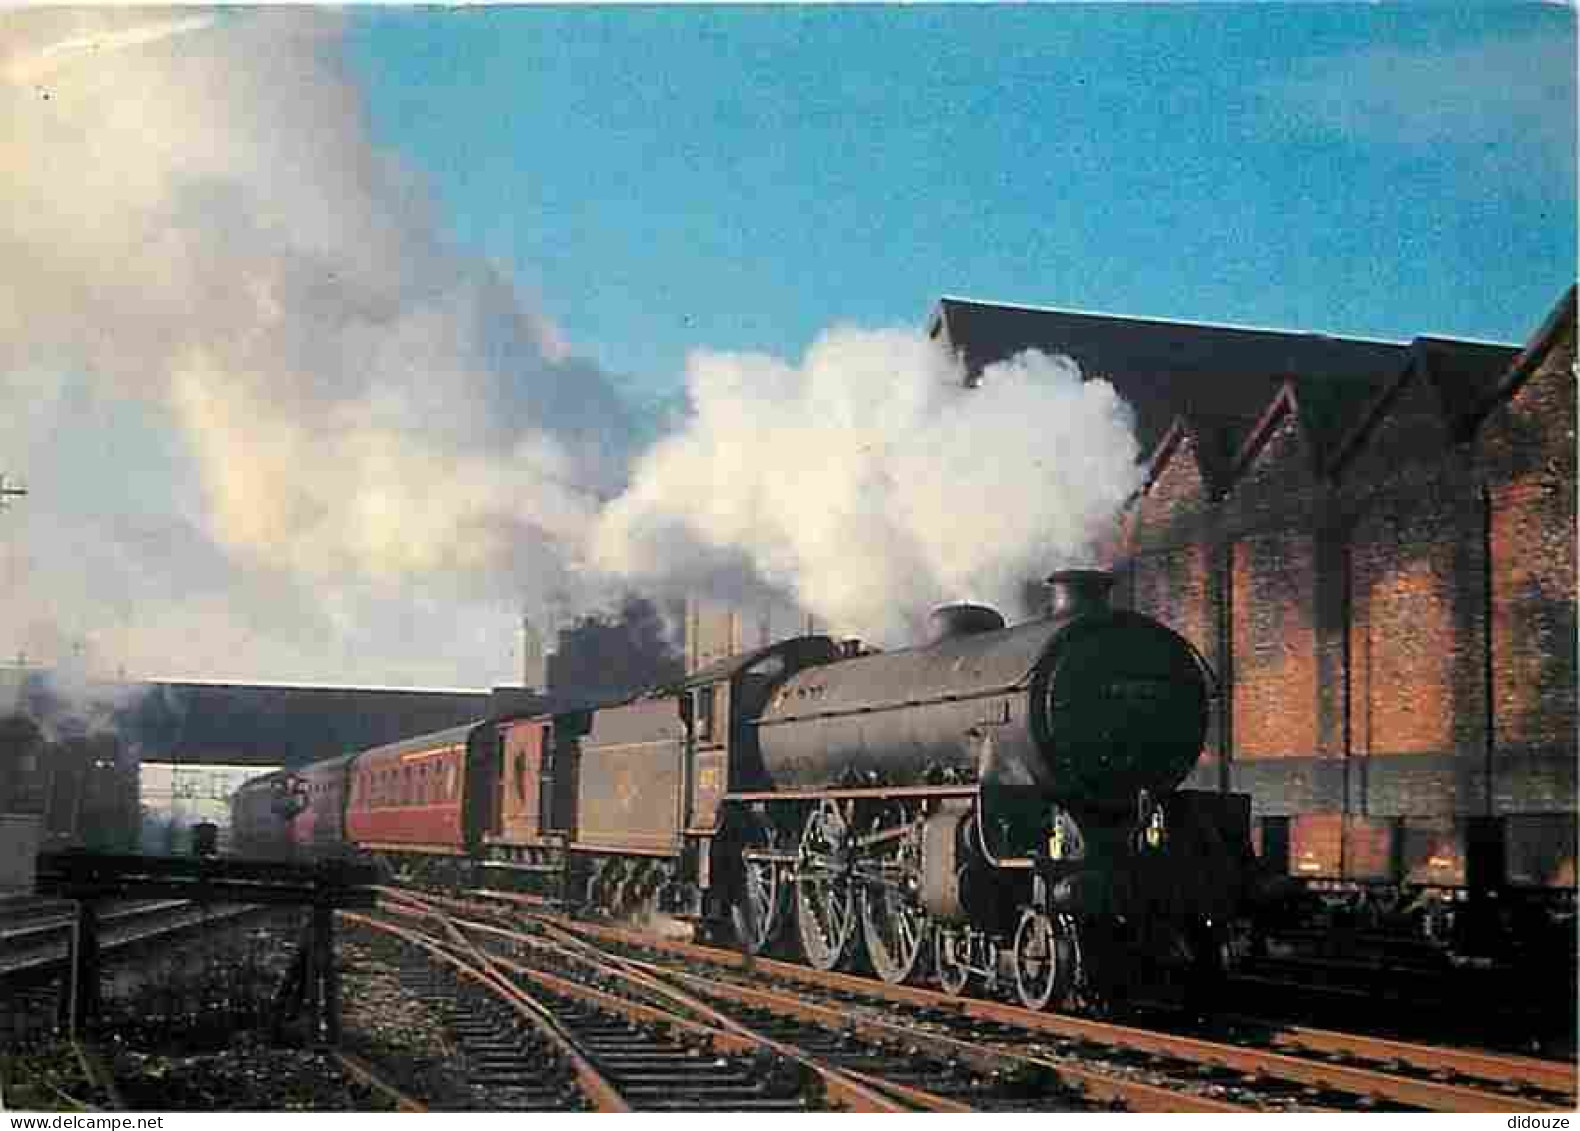 Trains - Royaume Uni - Thompson B1 4-6-0 At Newton Heath - Locomotive - CPM - UK - Voir Scans Recto-Verso - Trains